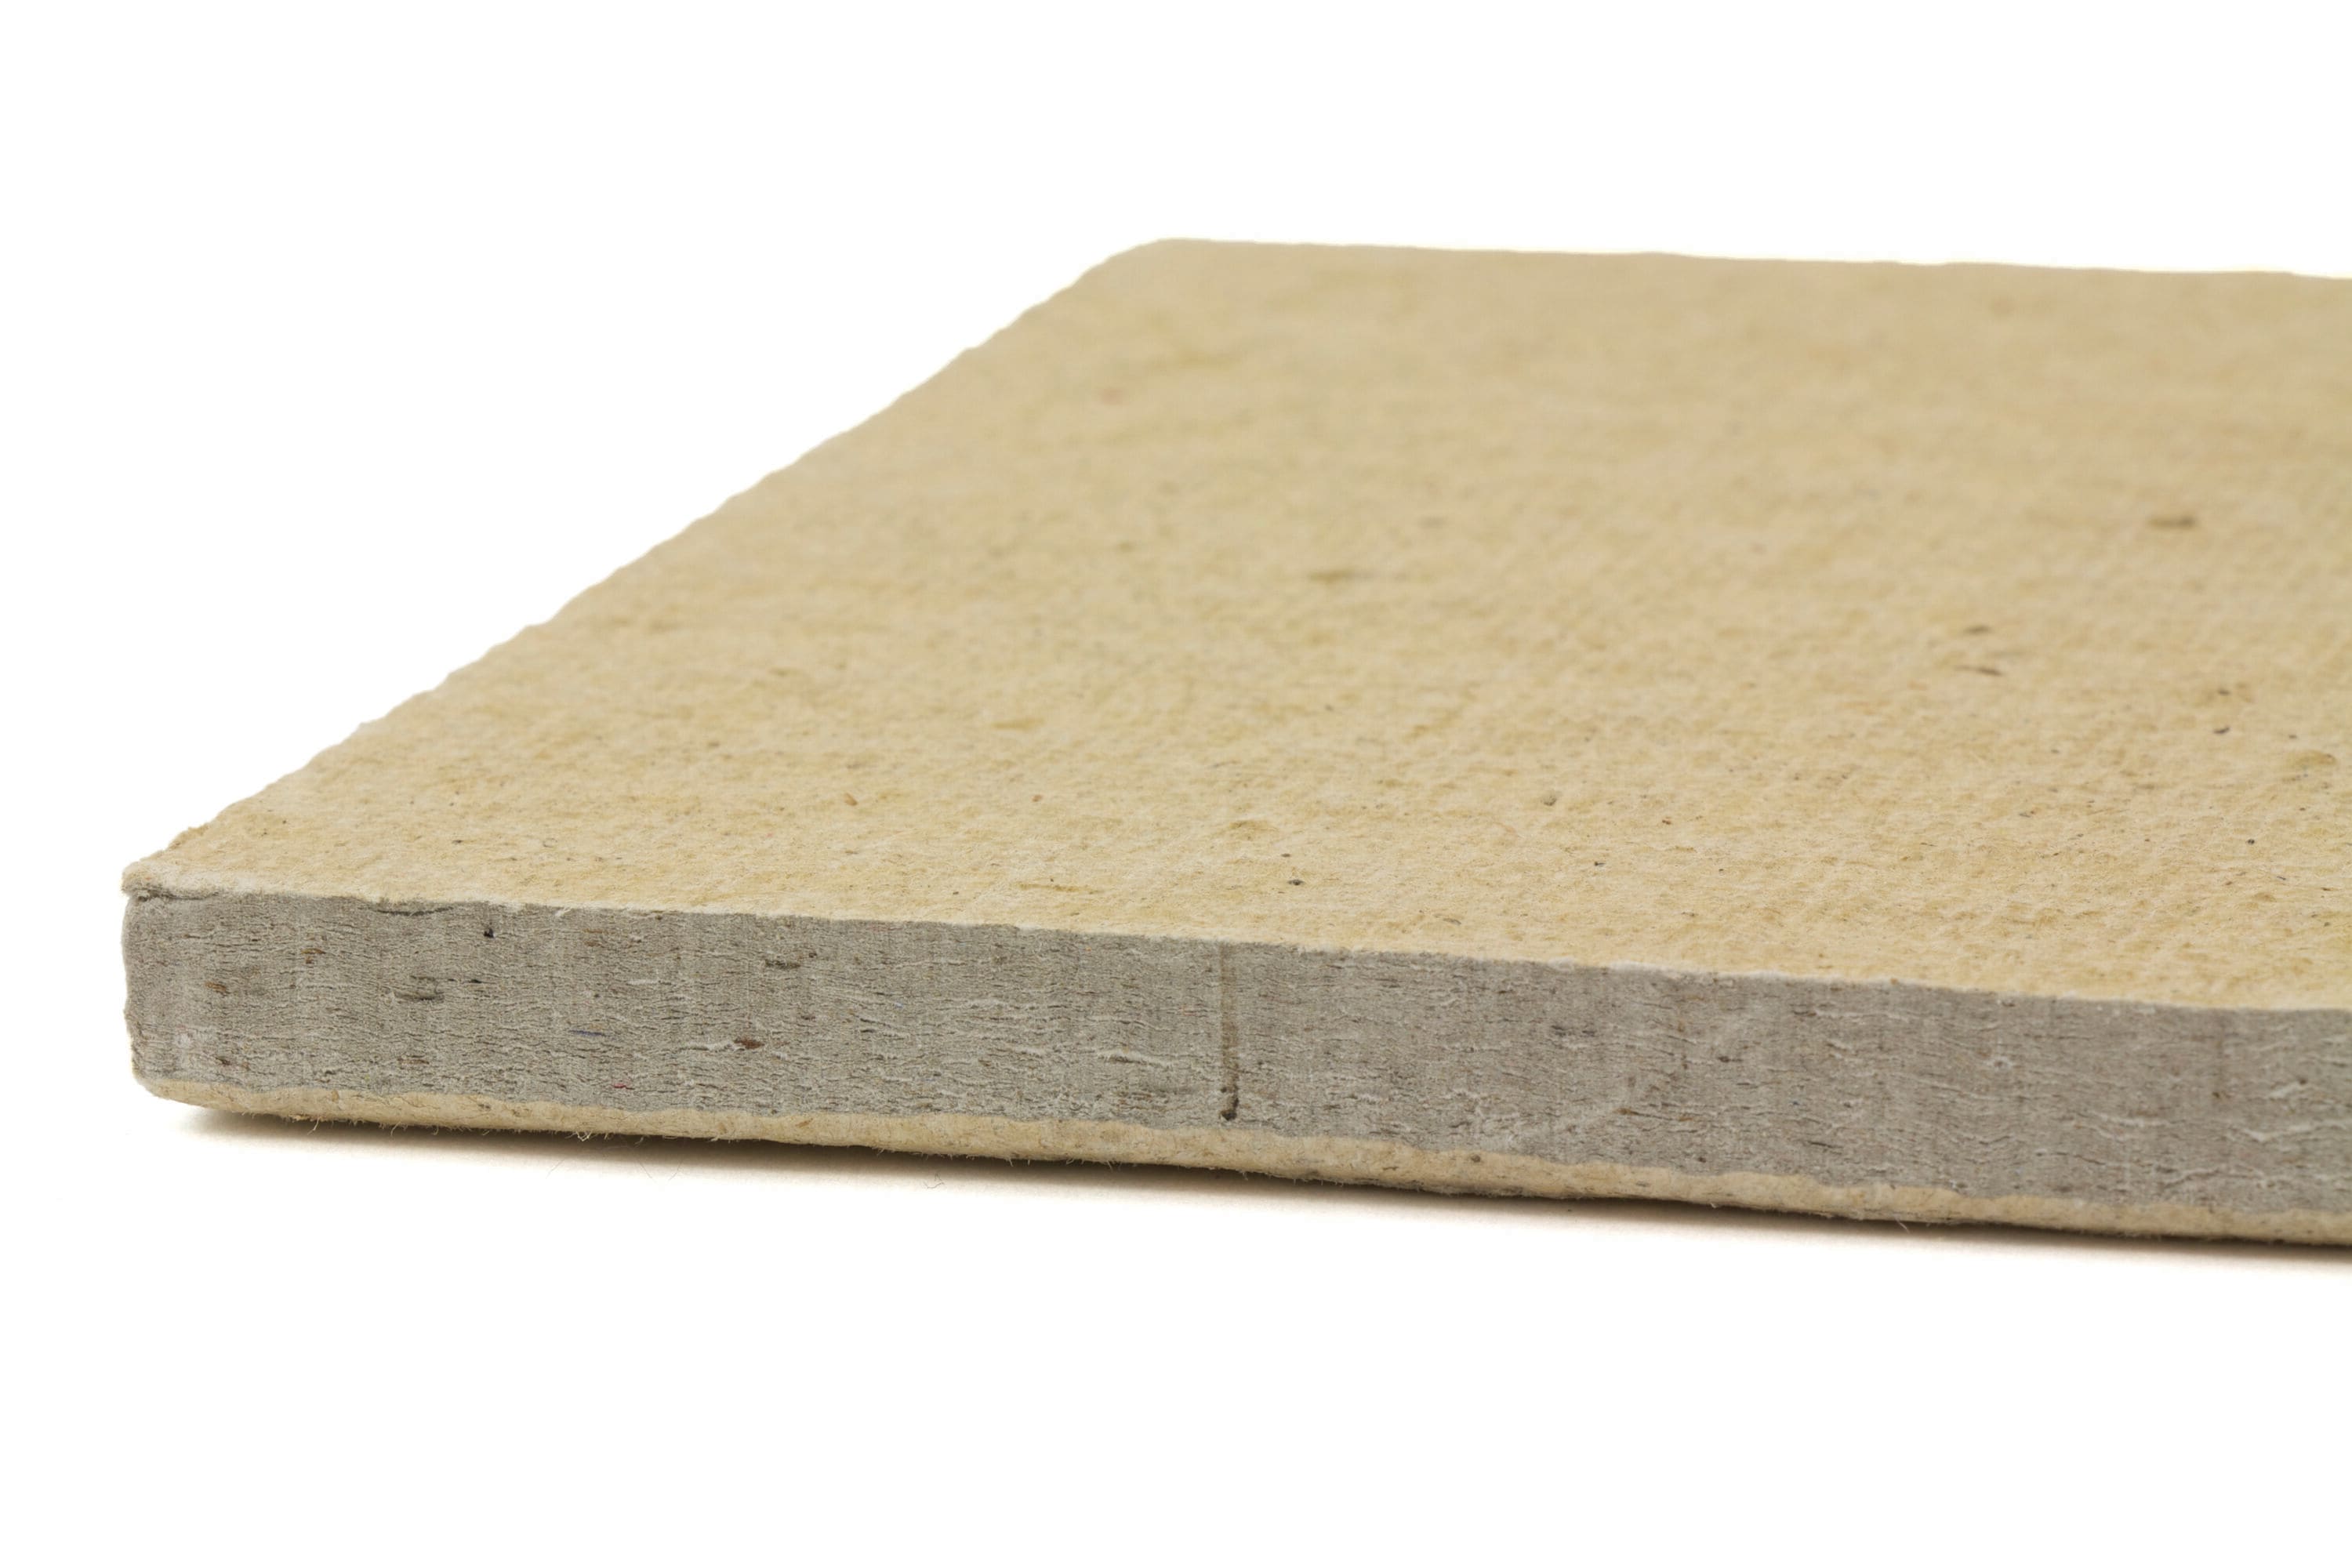 Insullam Insulation Board 2 inch with 1 2 inch OSB, from Insulfoam